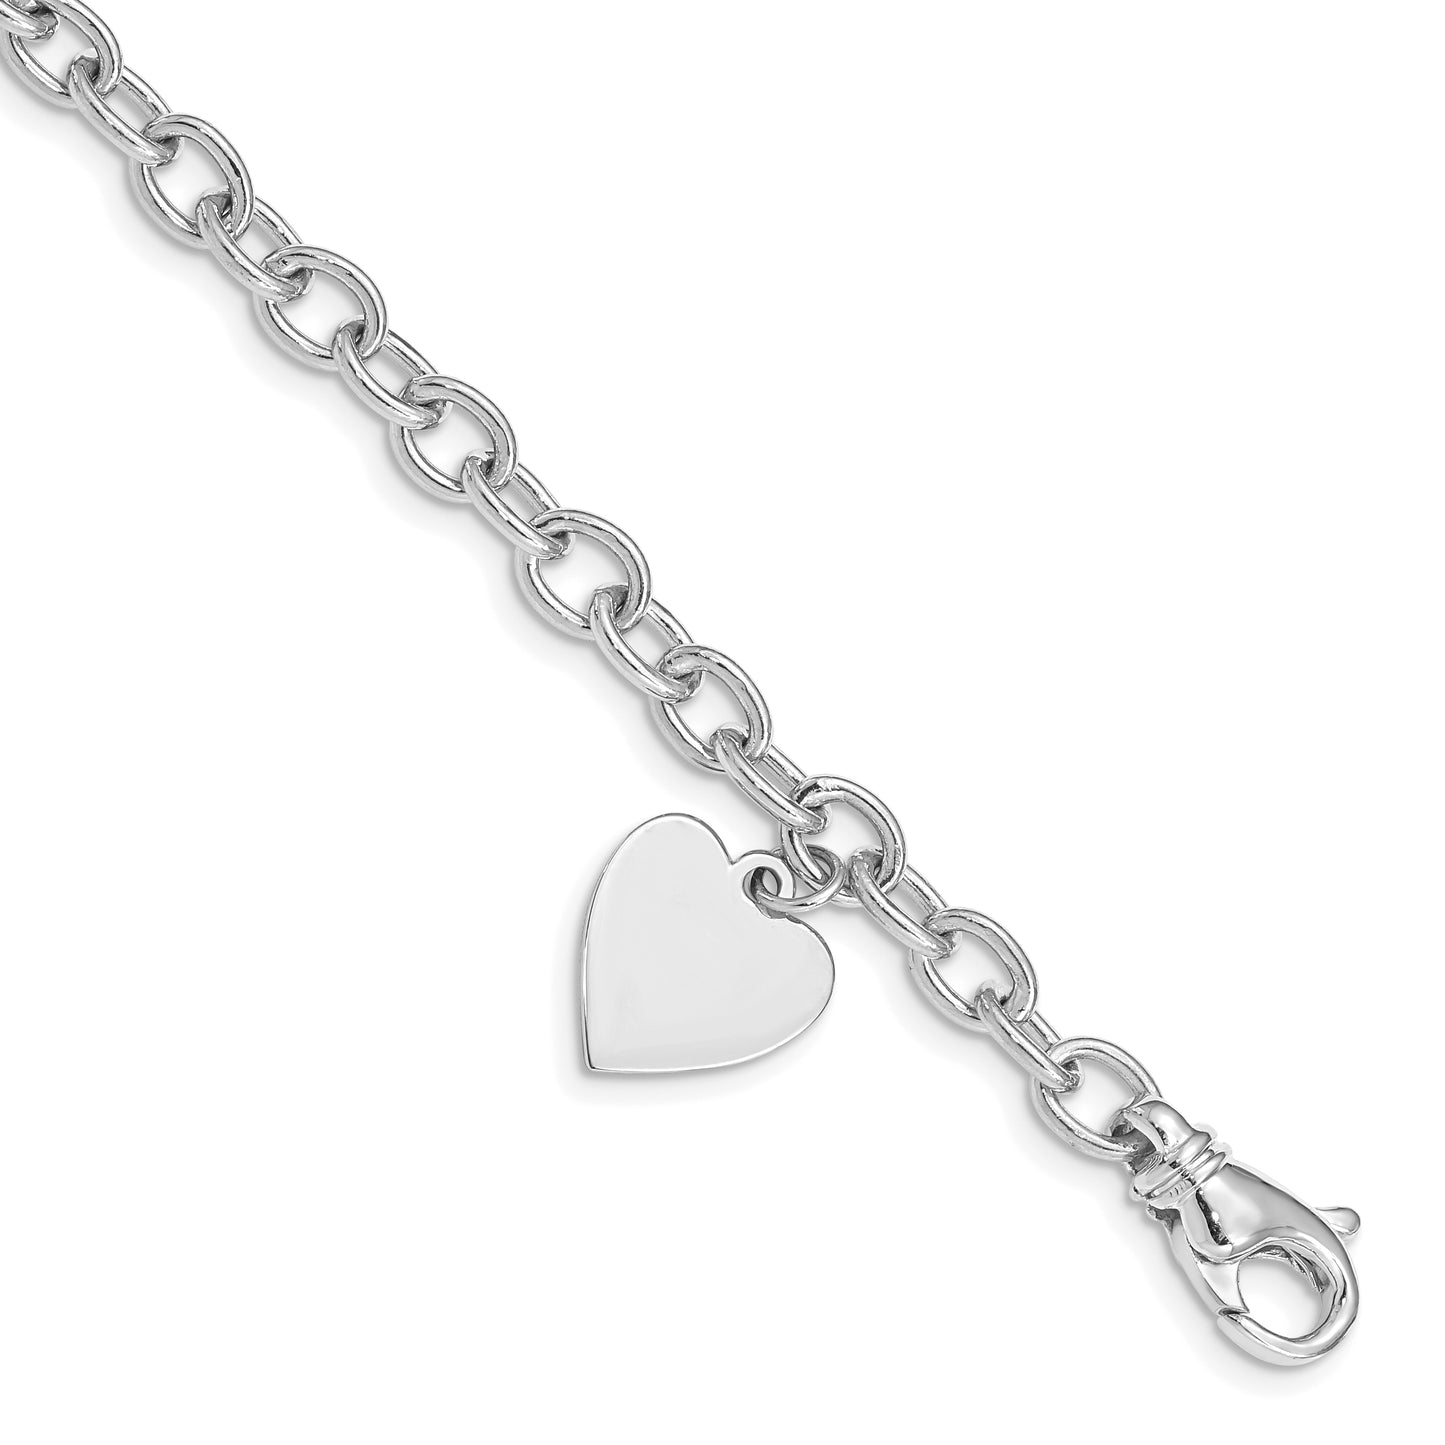 14k White Gold Link with Heart Charm Bracelet